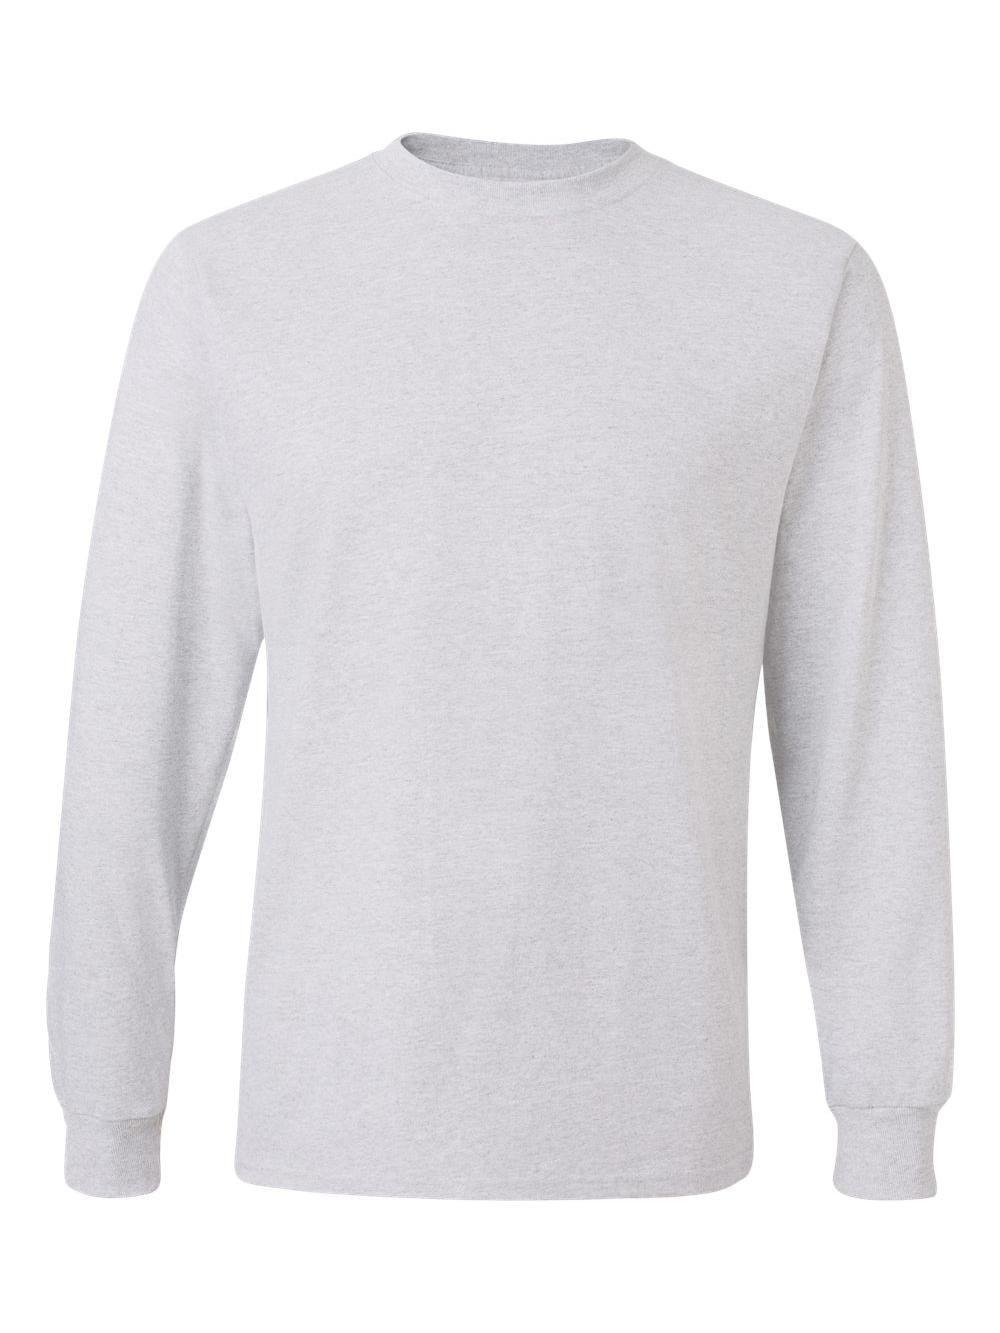 Jerzees T-Shirts - Long Sleeve HiDENSI-T Long Sleeve T-Shirt - Walmart.com